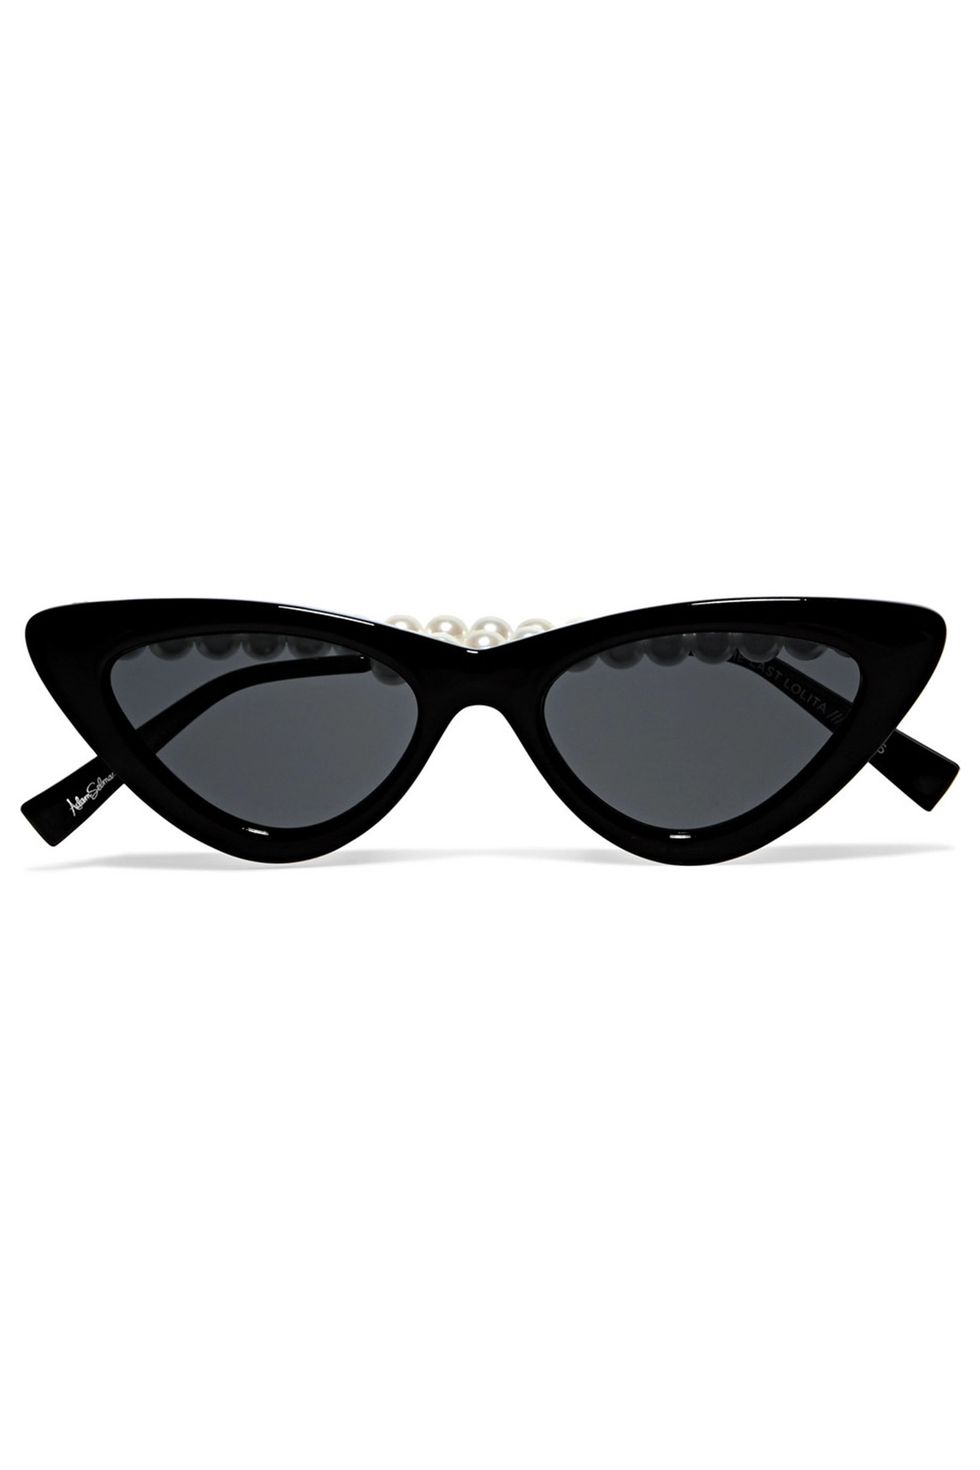 Audrey Hepburn's Sunglasses: Some Classics Are Forever